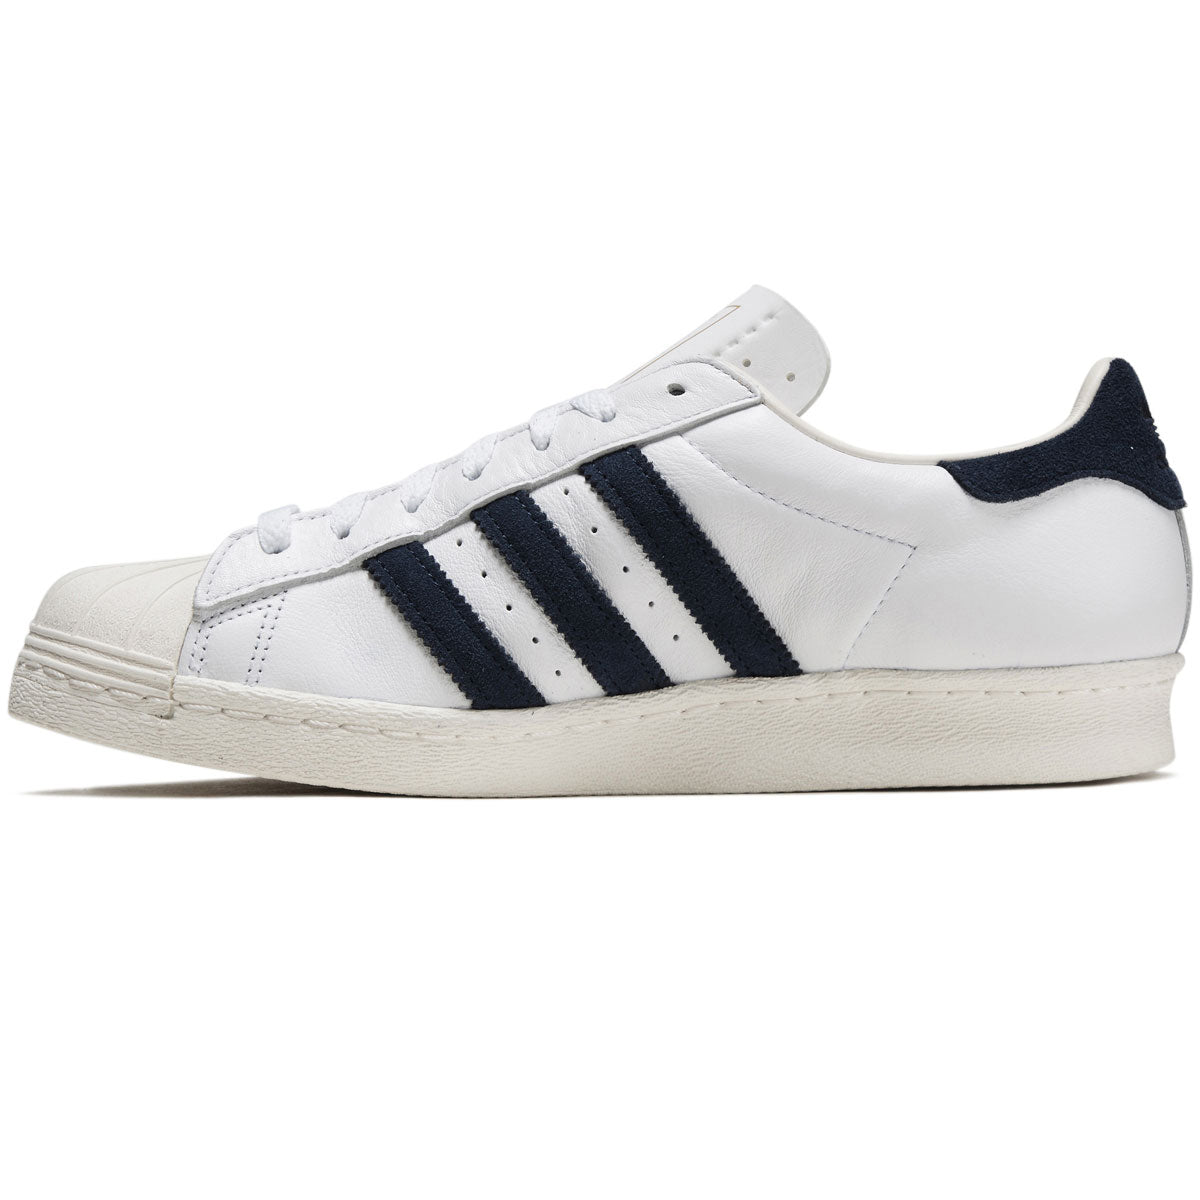 Adidas x Pop Trading Co Superstar Adv Shoes - White/Collegiate Navy/Chalk White image 2